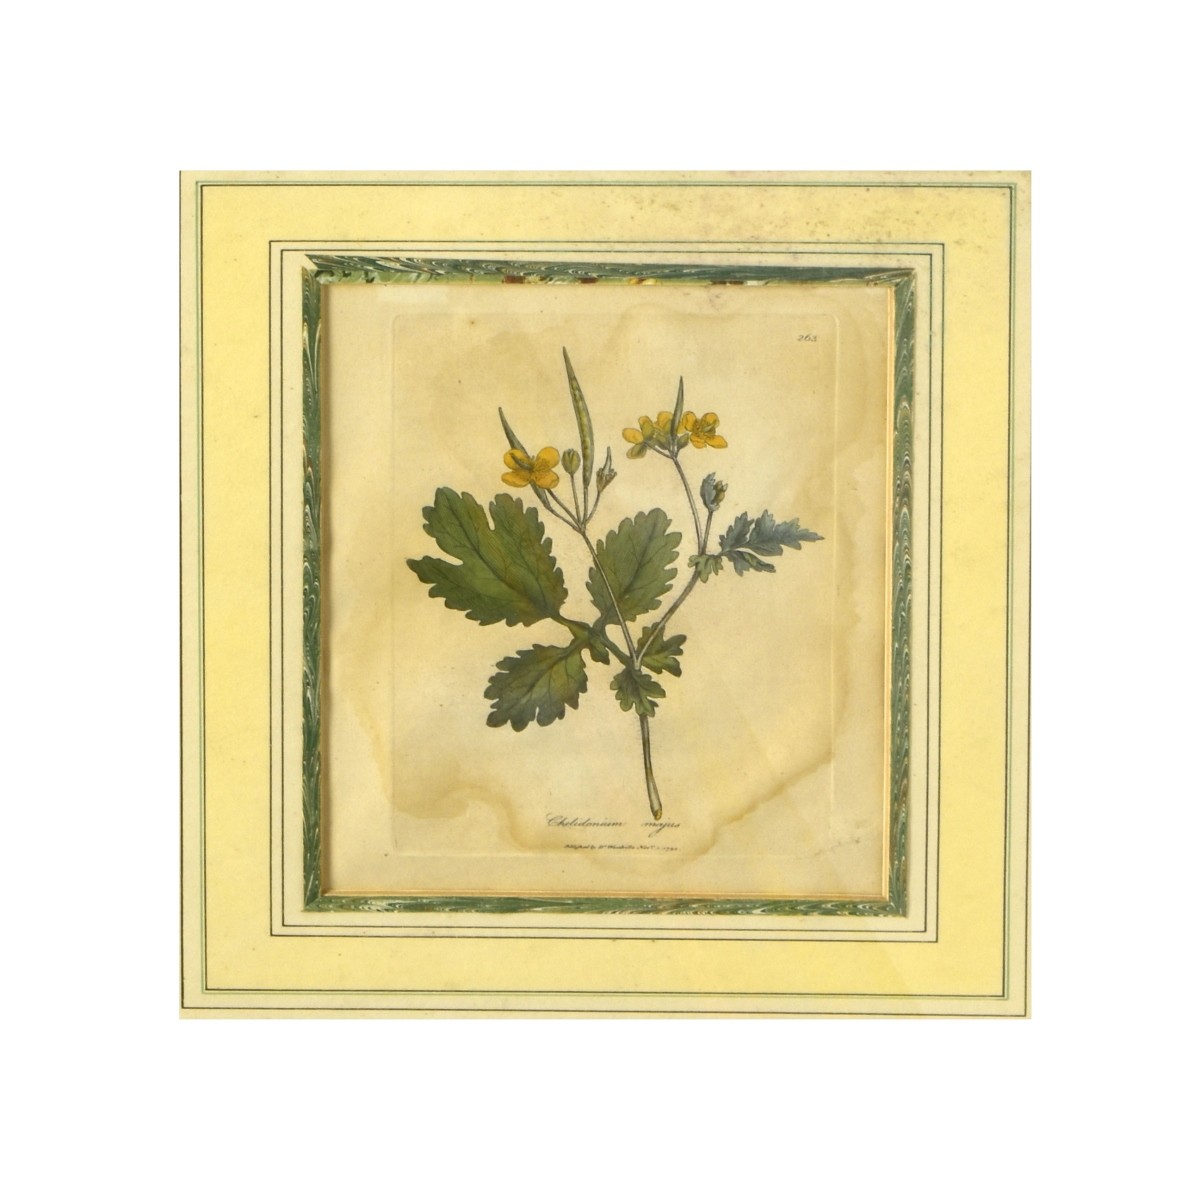 Circa 1790s Hand Colored Botanical Engravings